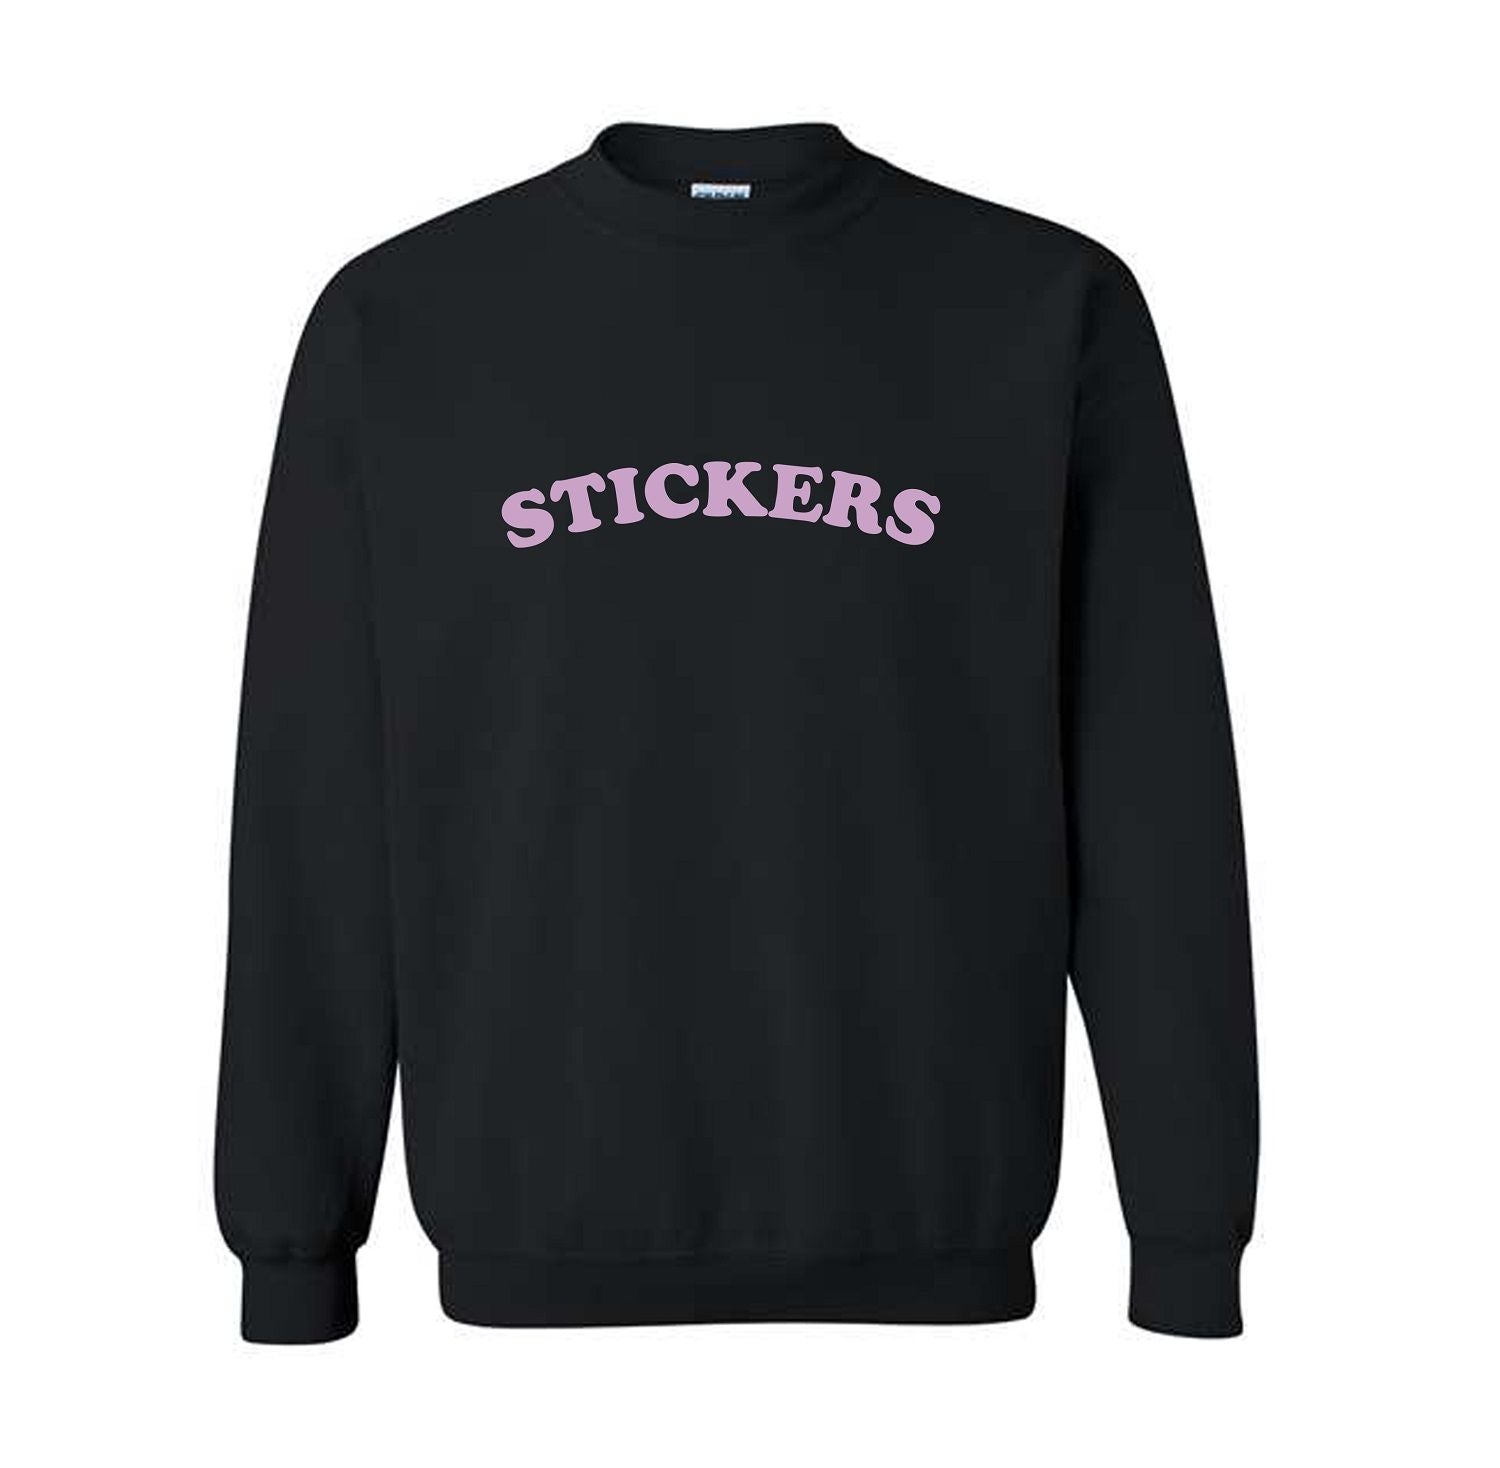 STICKERS Crewneck Sweatshirt: Black